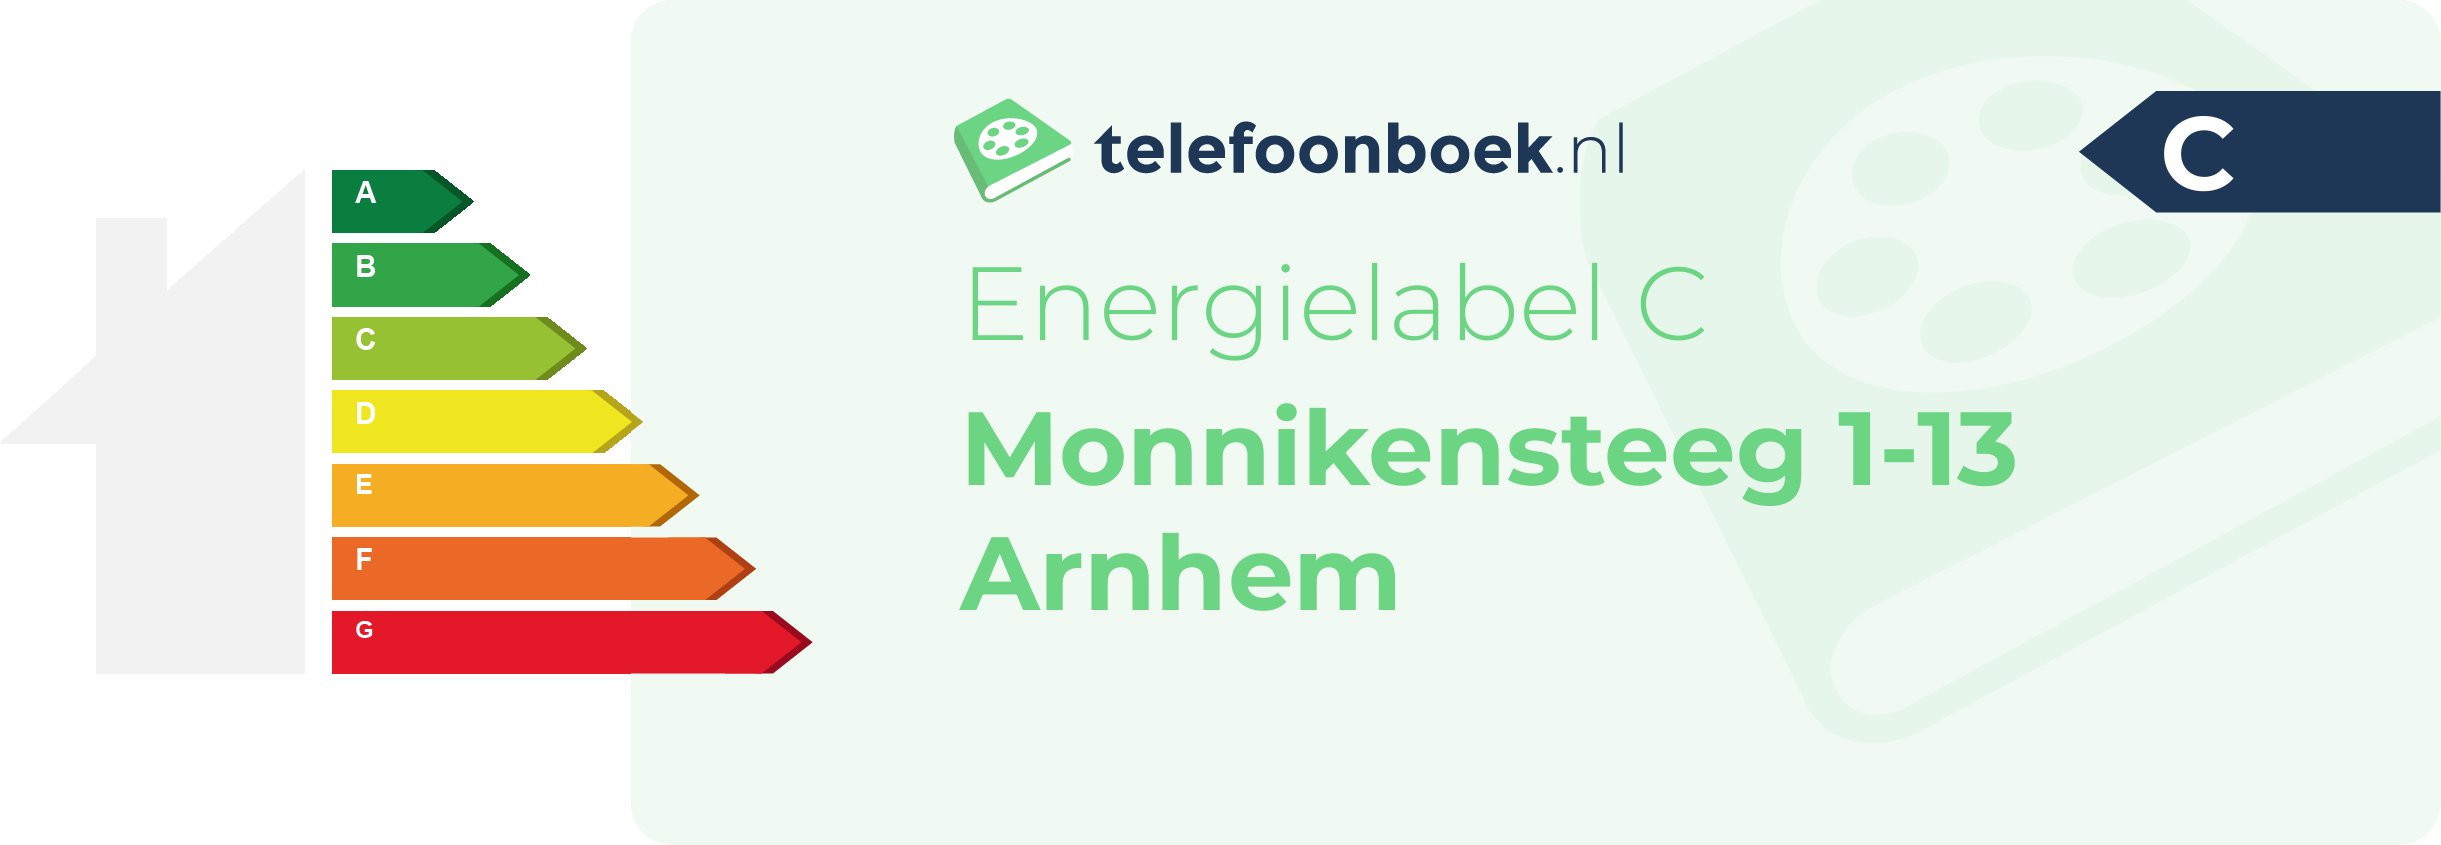 Energielabel Monnikensteeg 1-13 Arnhem